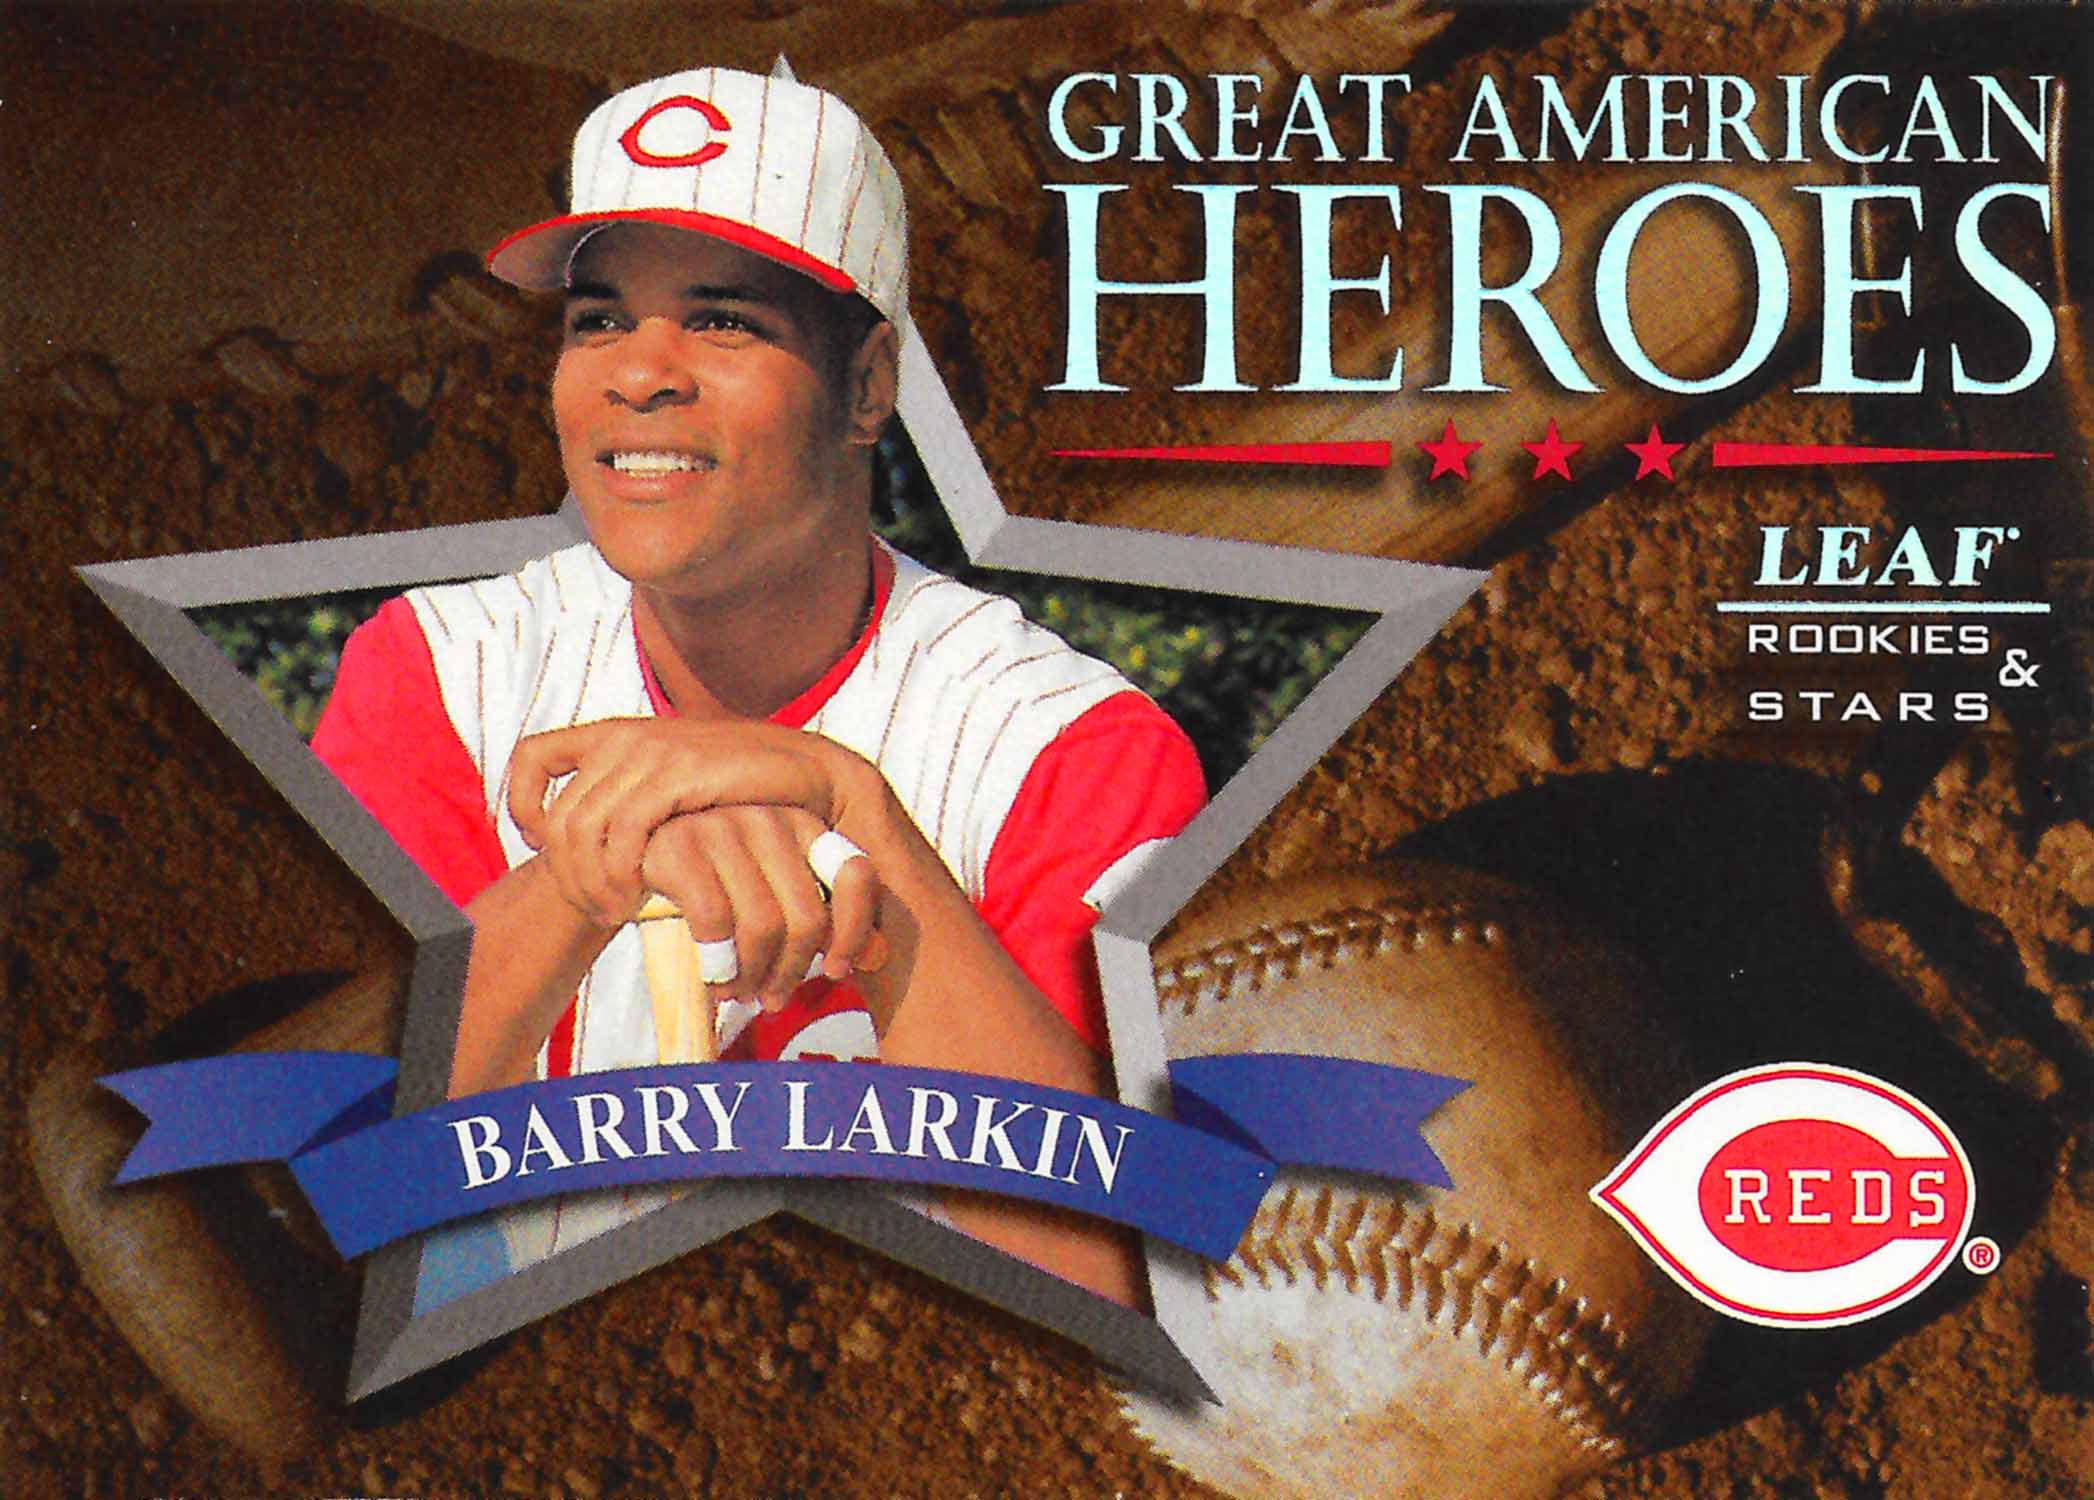 1998 Leaf Rookies and Stars Great American Heroes